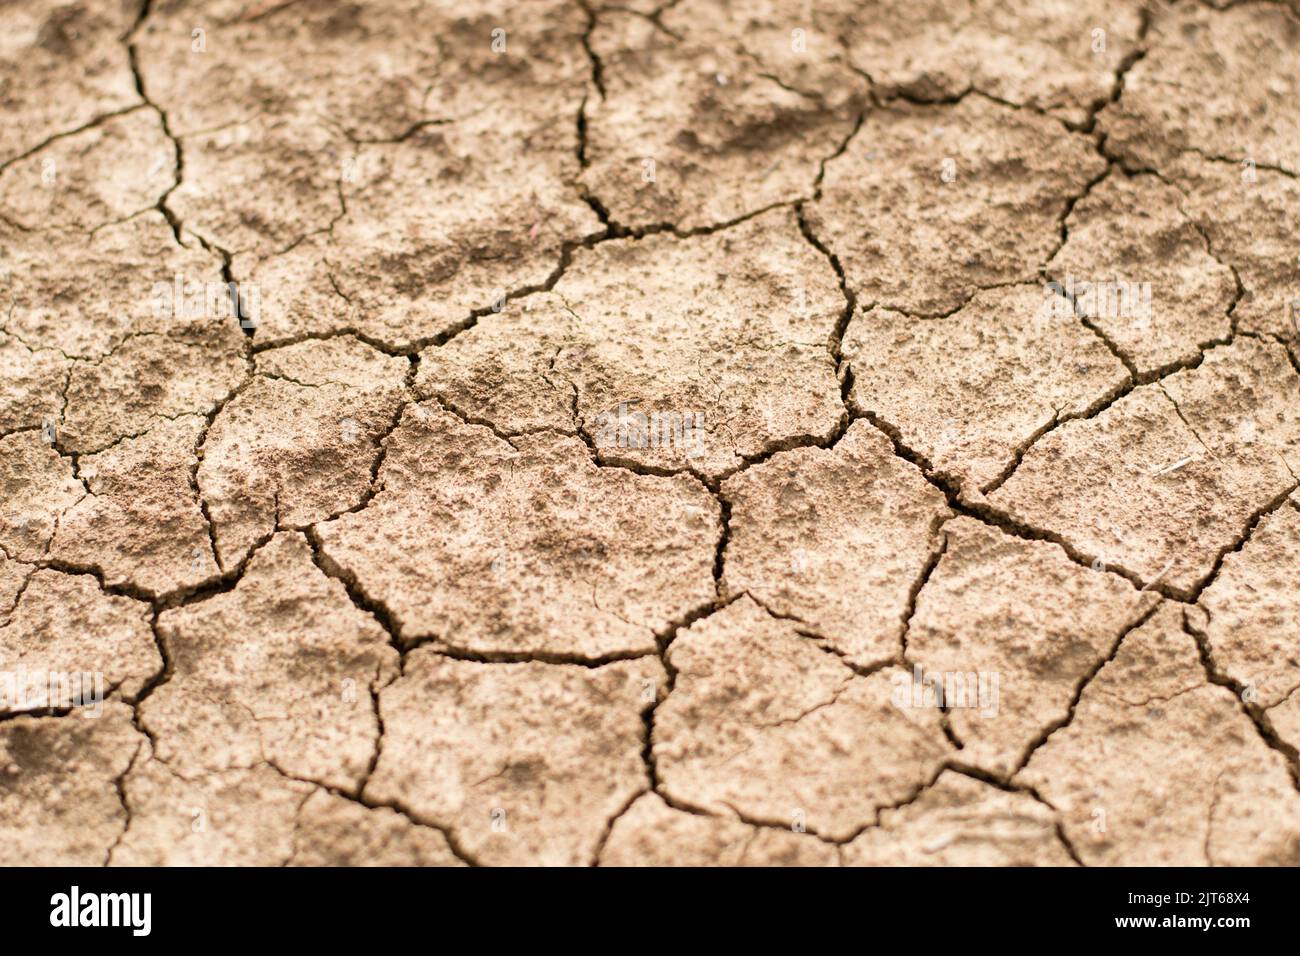 Cracked clay ground into the dry season Stock Photo